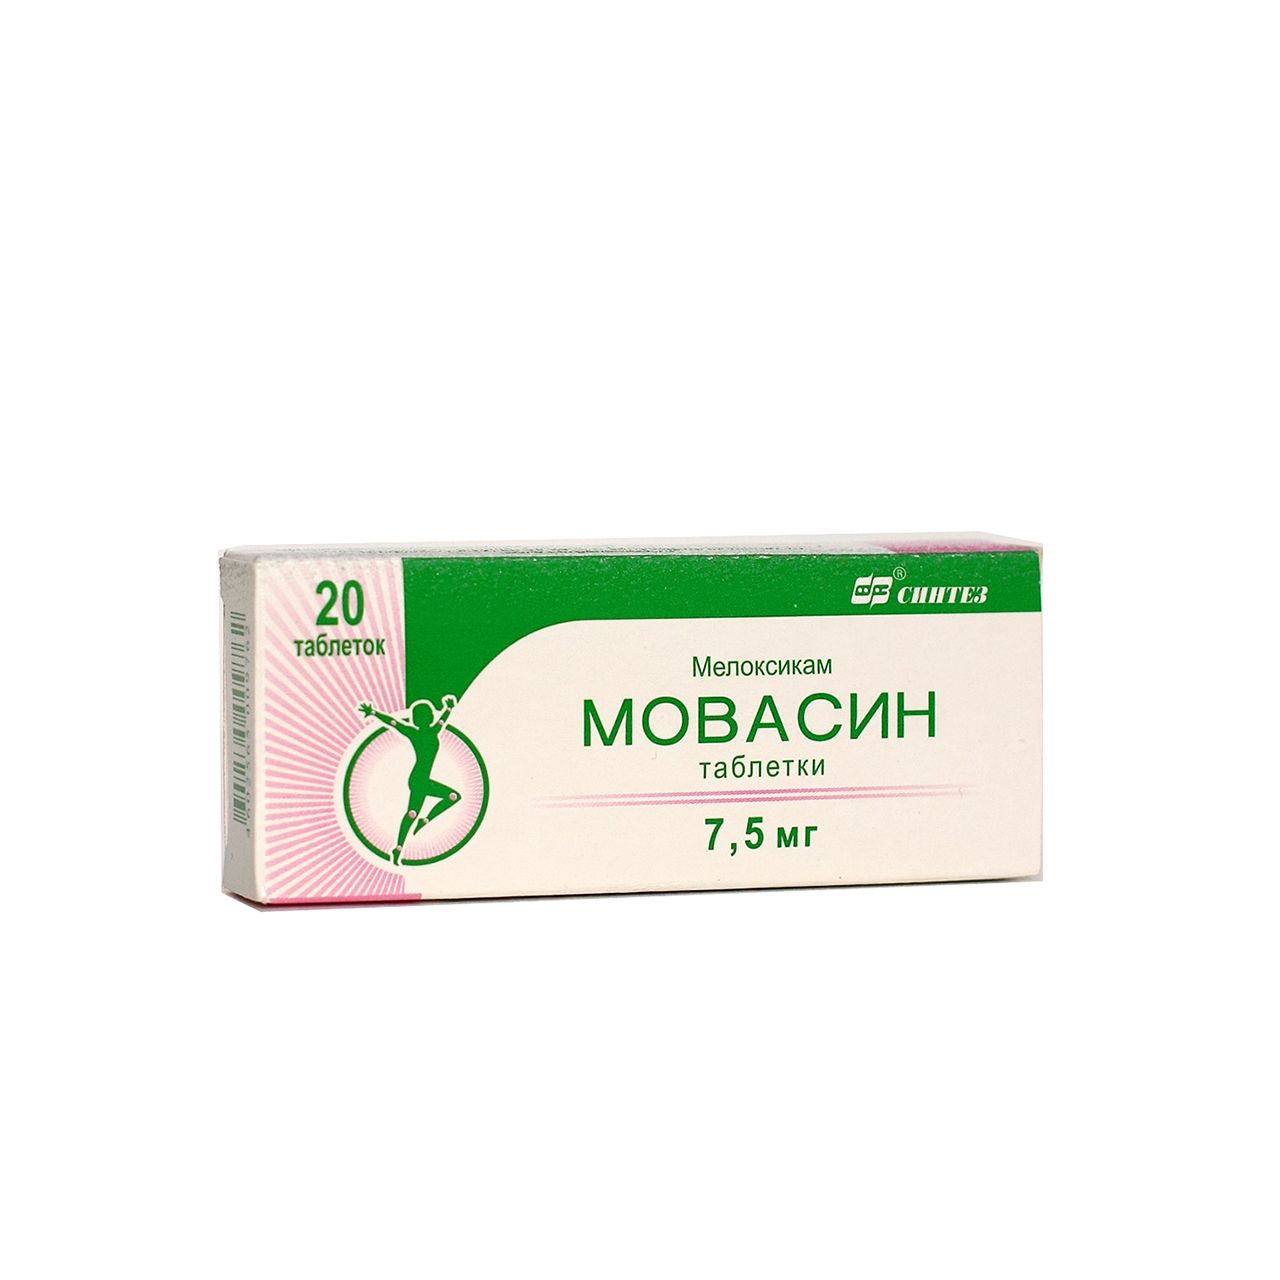 Мовасин, 7.5 мг, таблетки, 20 шт., Биоком-Технология ООО  в .